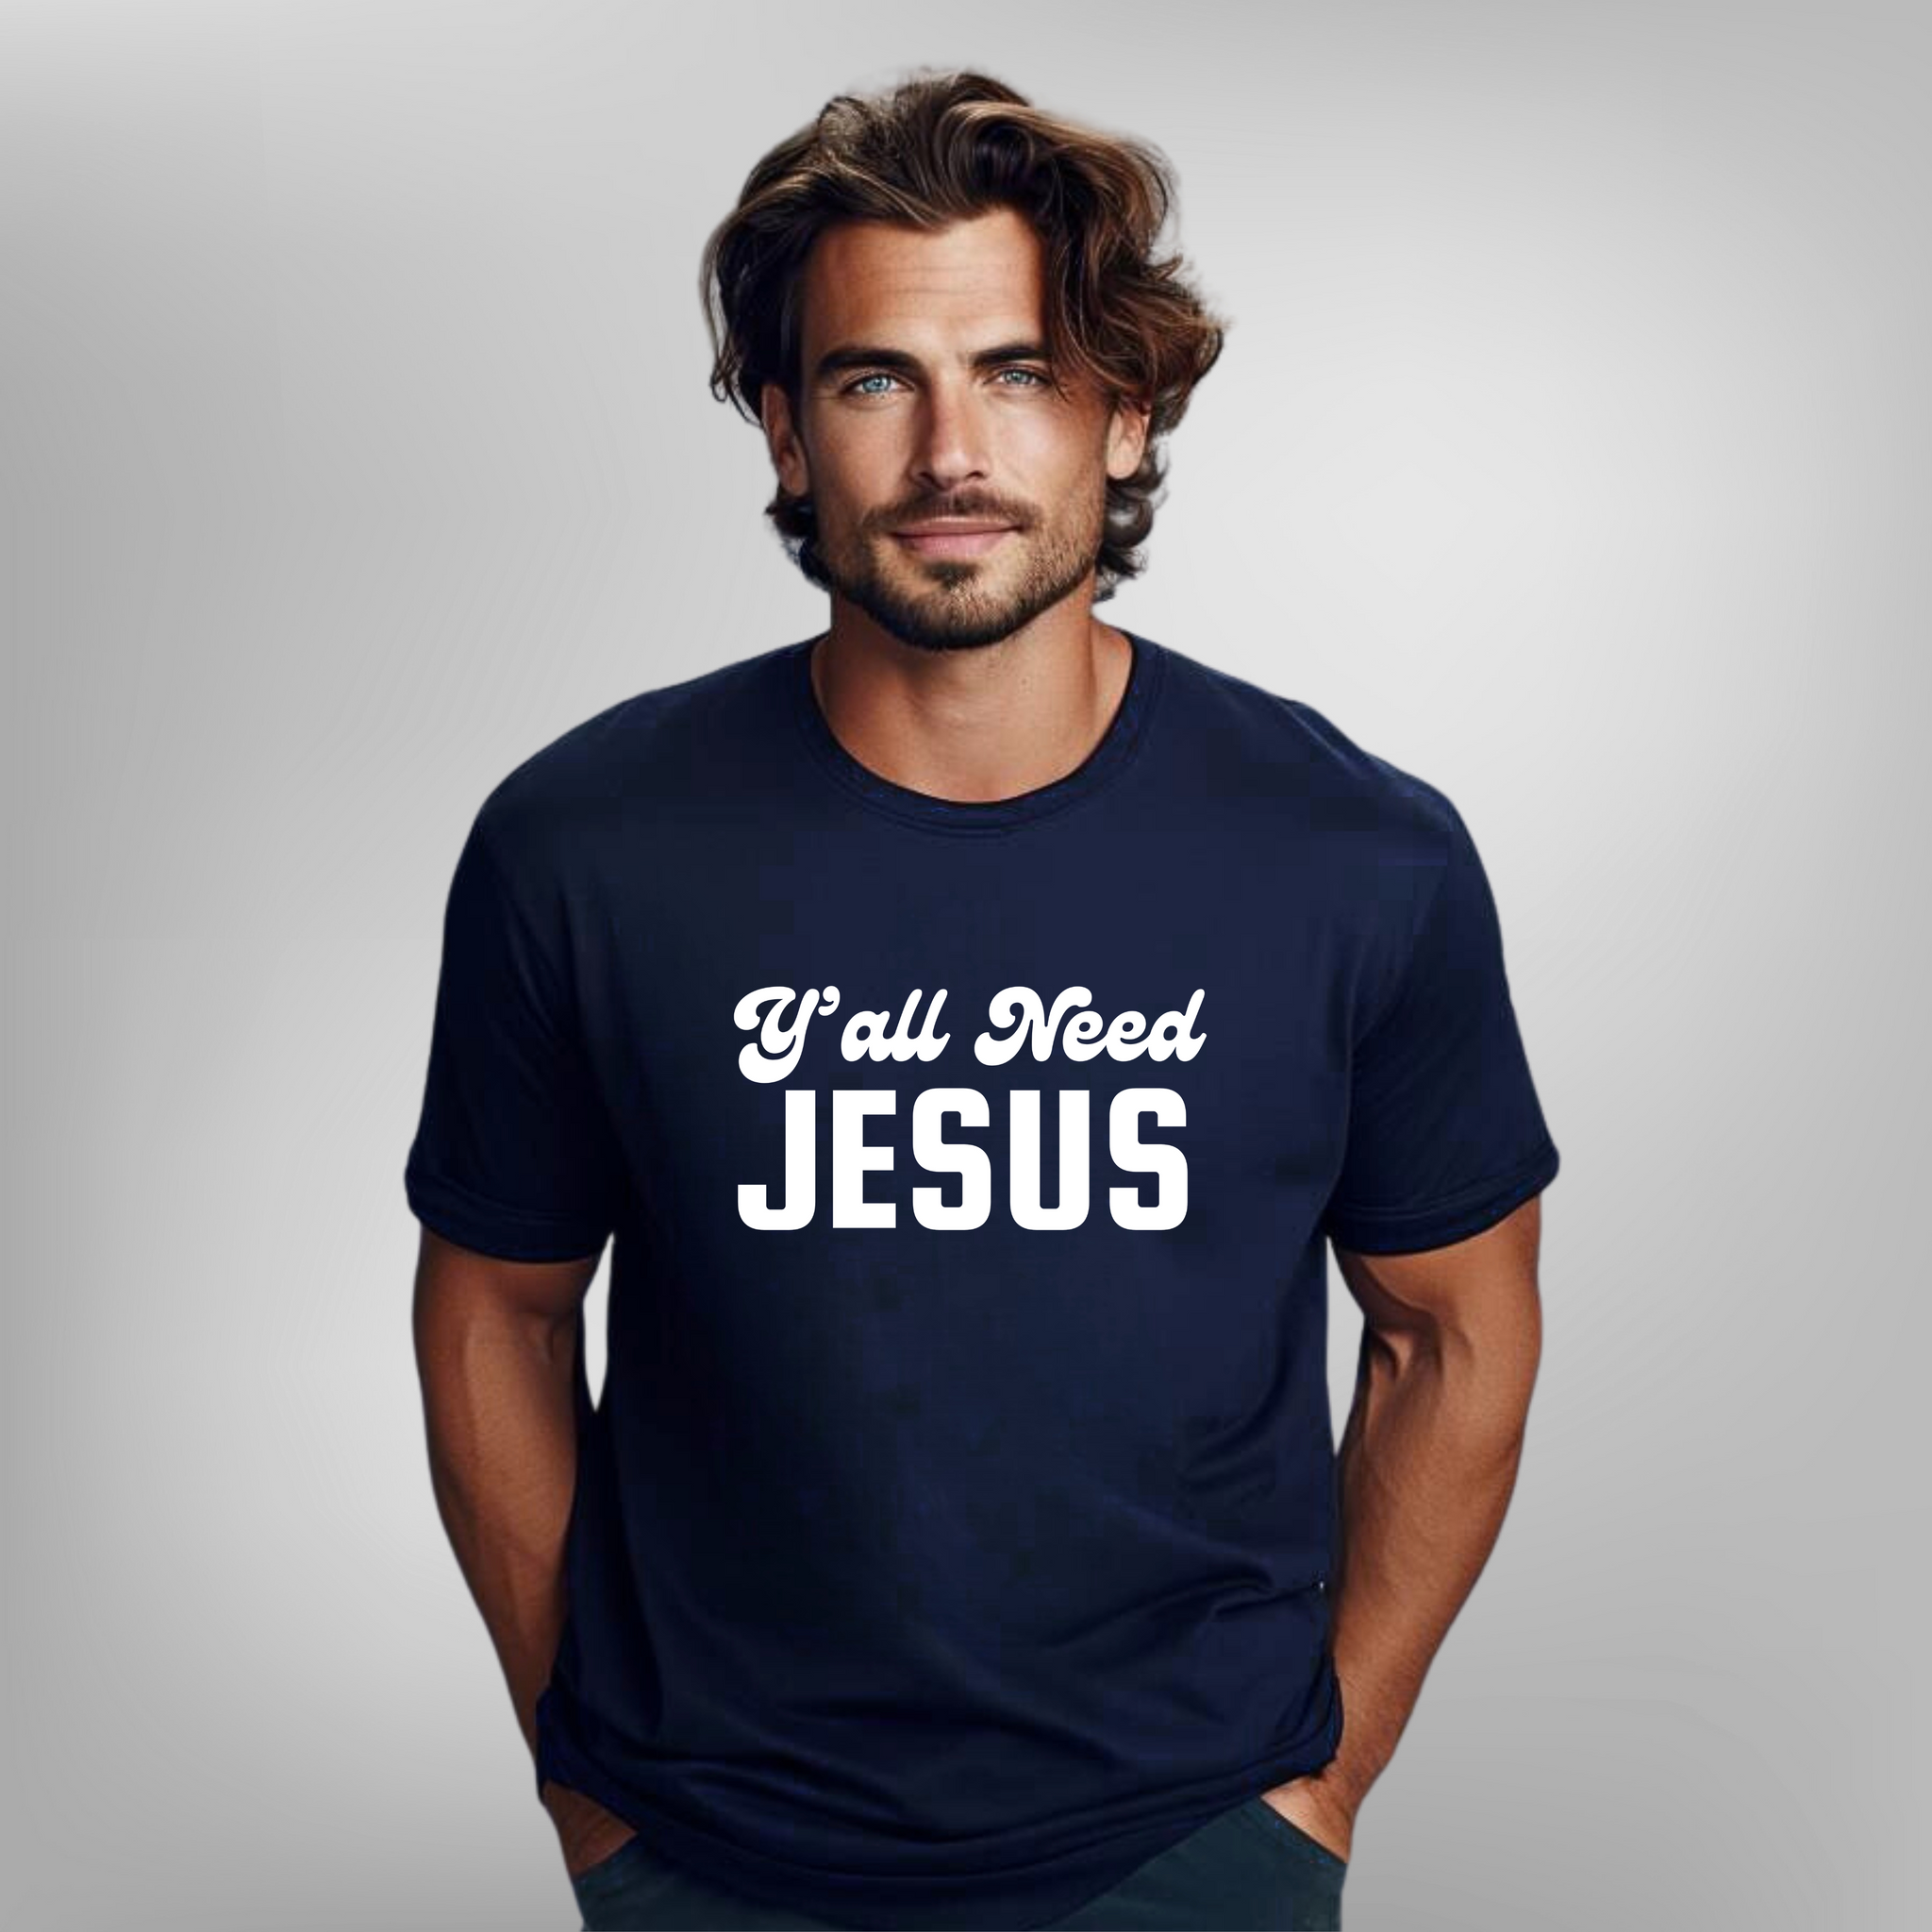 Y'all Need Jesus T-Shirt NAVY (Unisex)